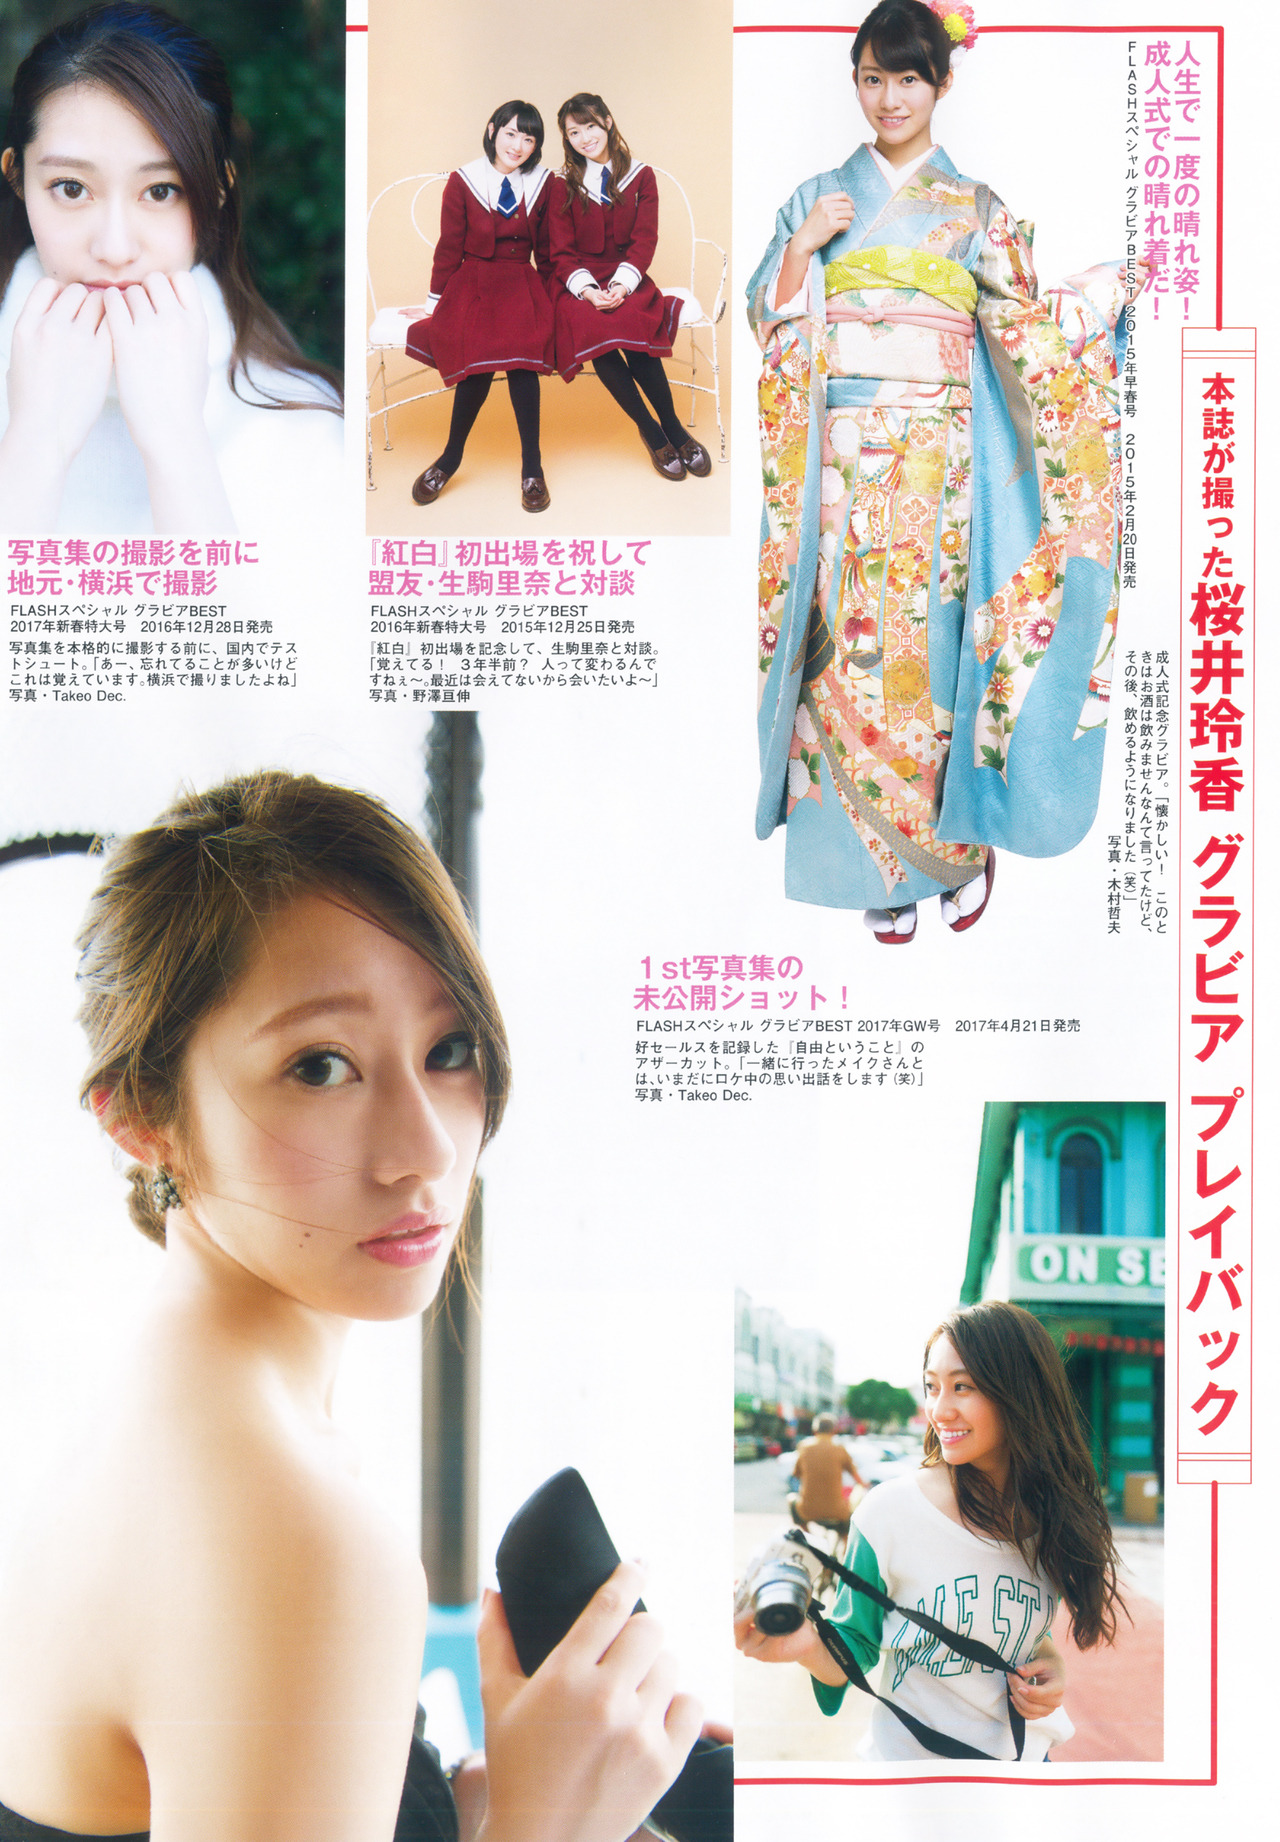 Photoshoot Sakurai Reika Nogizaka46 For Flash Midsummer Special Sept 19 Hallyu